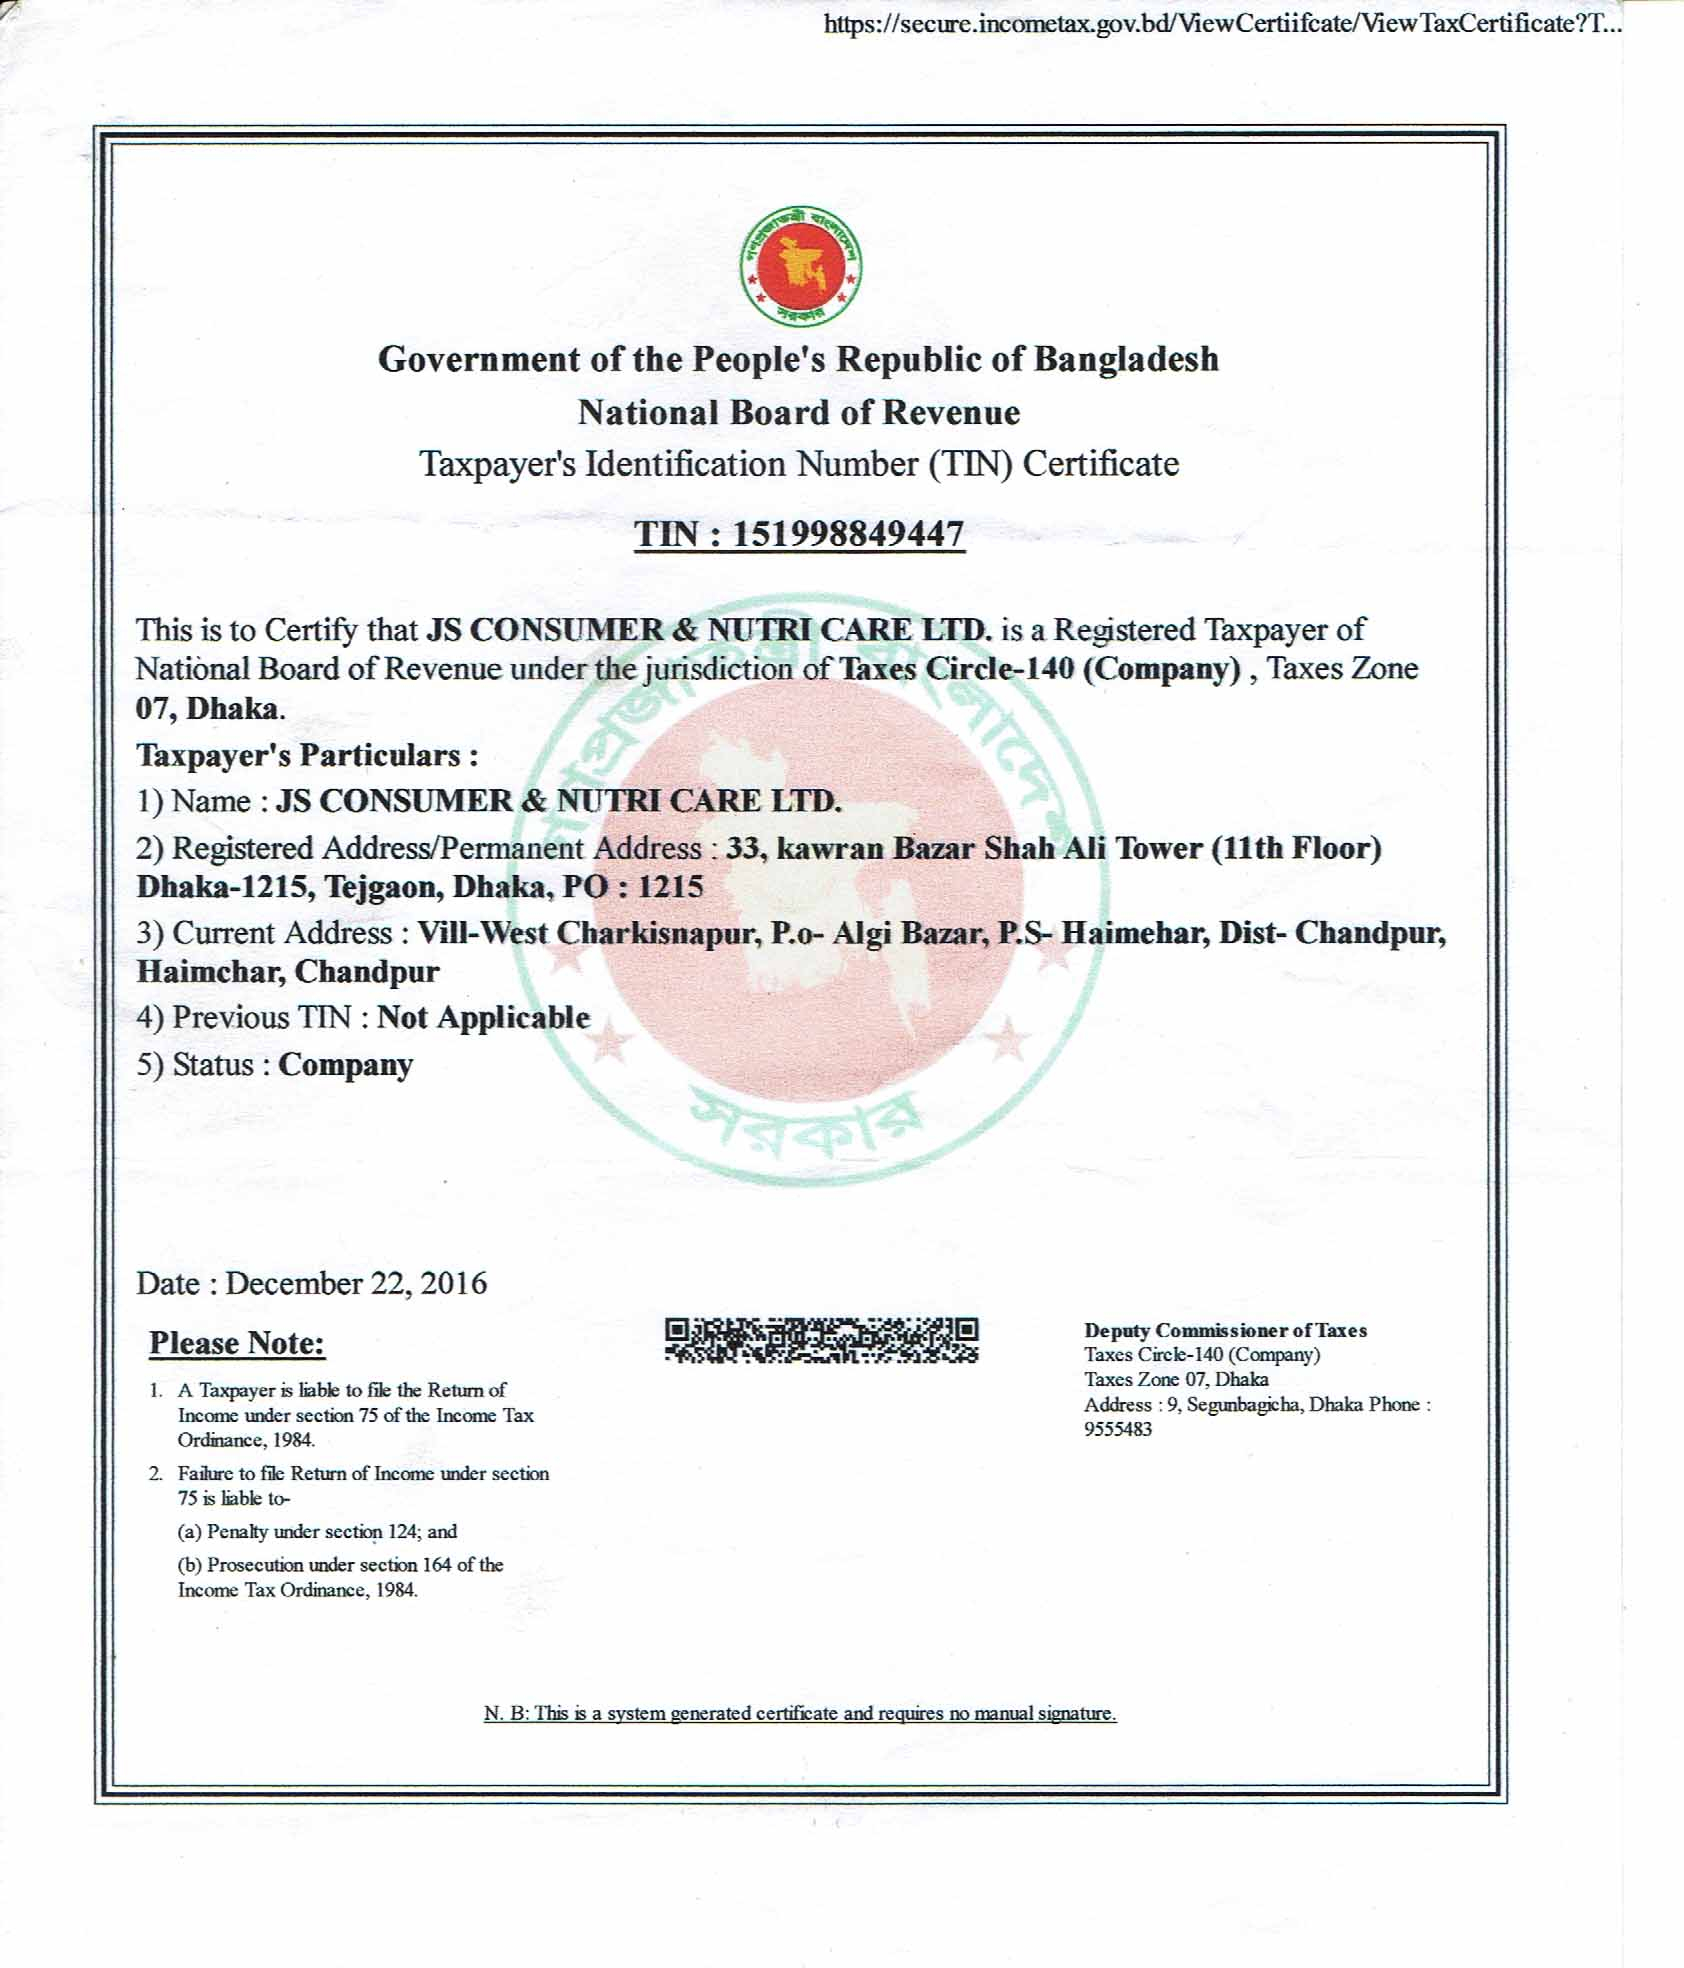 TIN Certificate